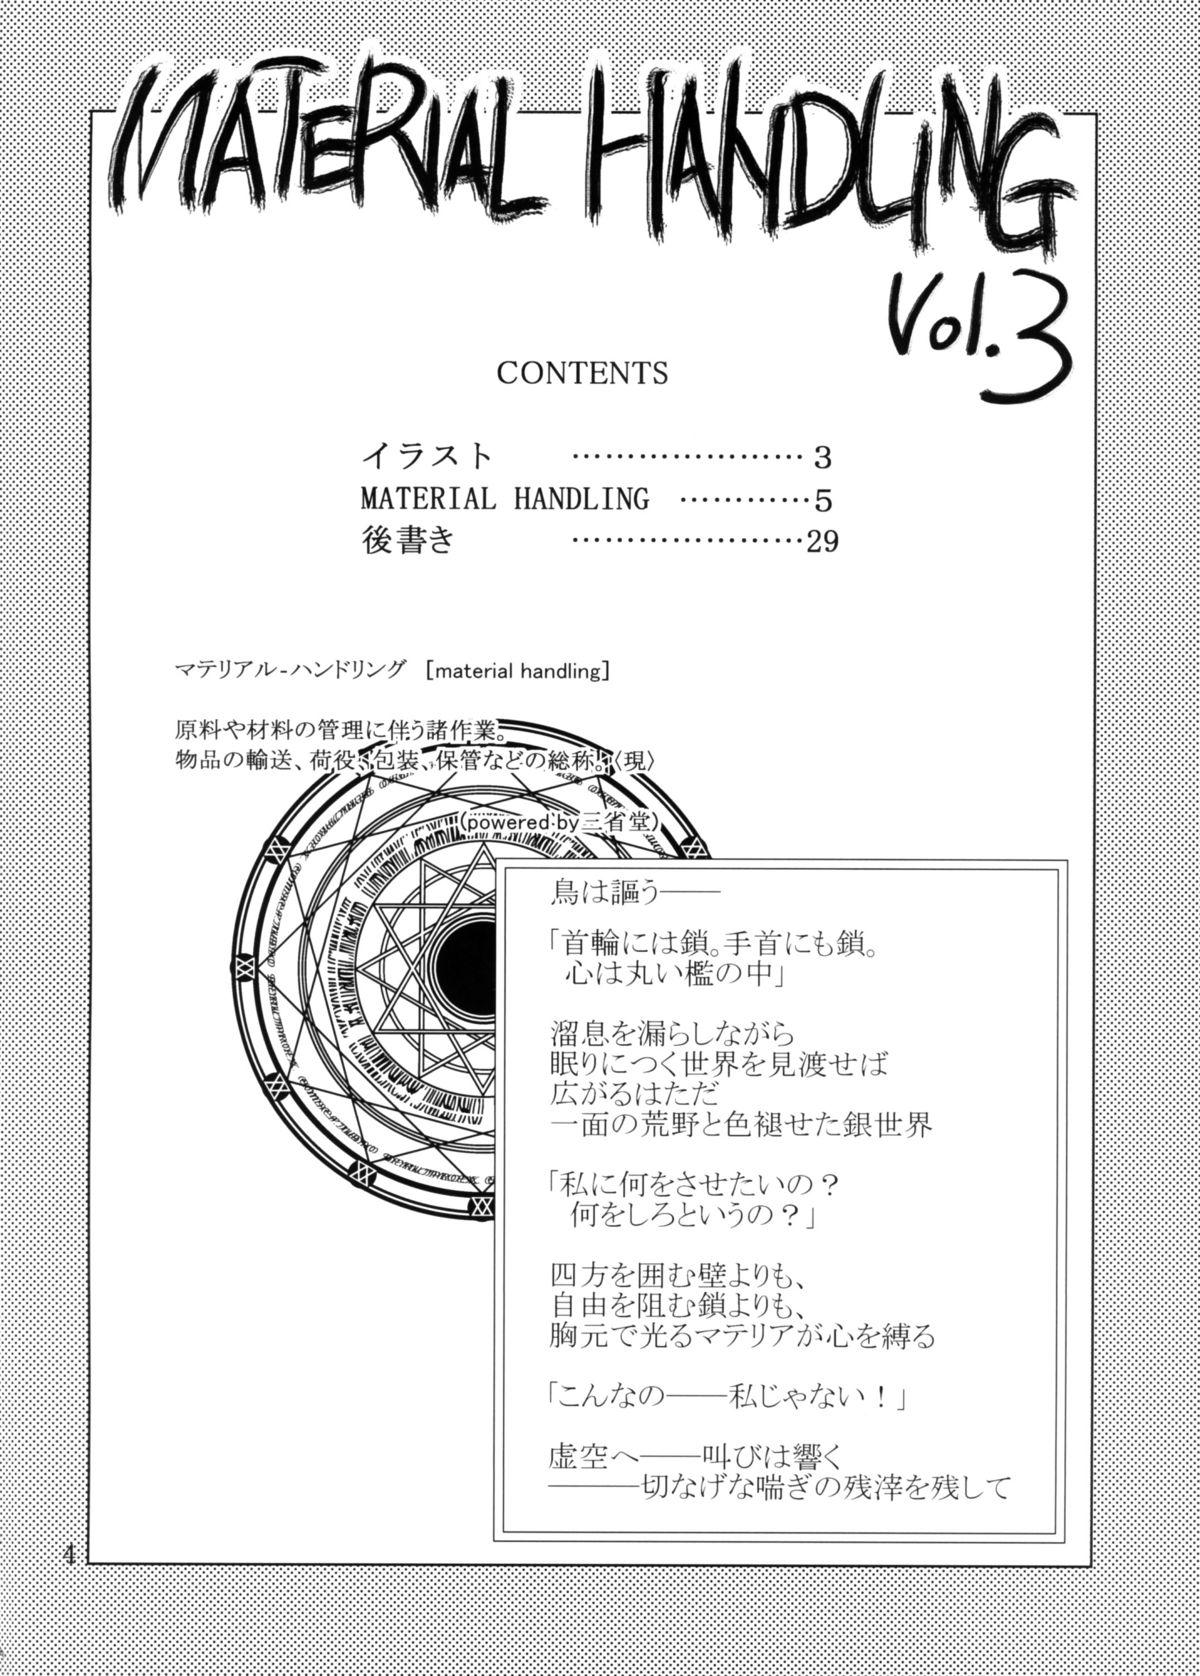 Jap Material Handling Vol. 3 - Final fantasy vii Skype - Page 3